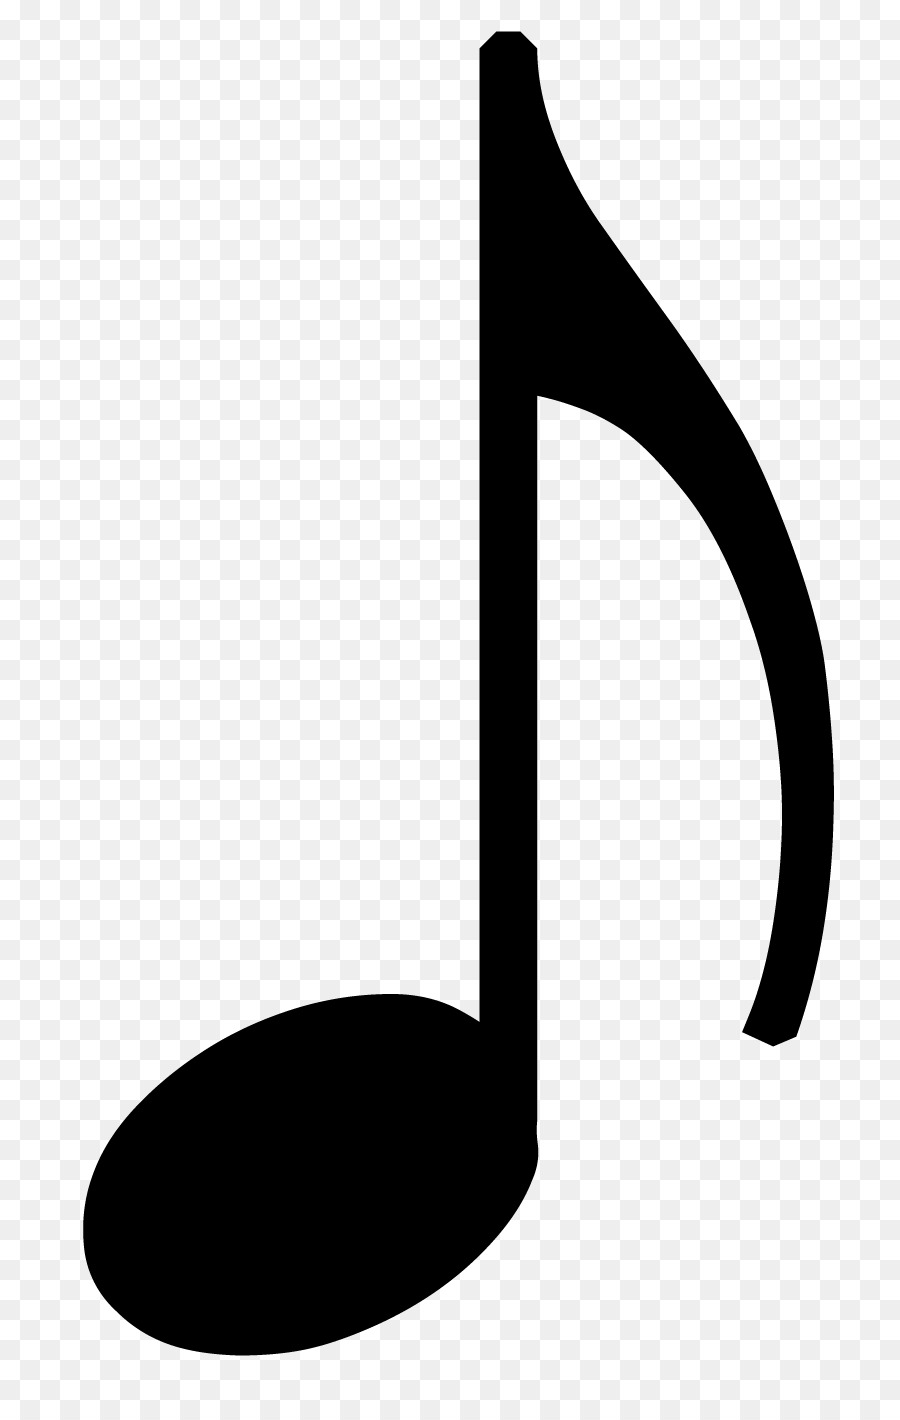 Musical notation Musical note - musical note png download - 820*1402 - Free Transparent  png Download.